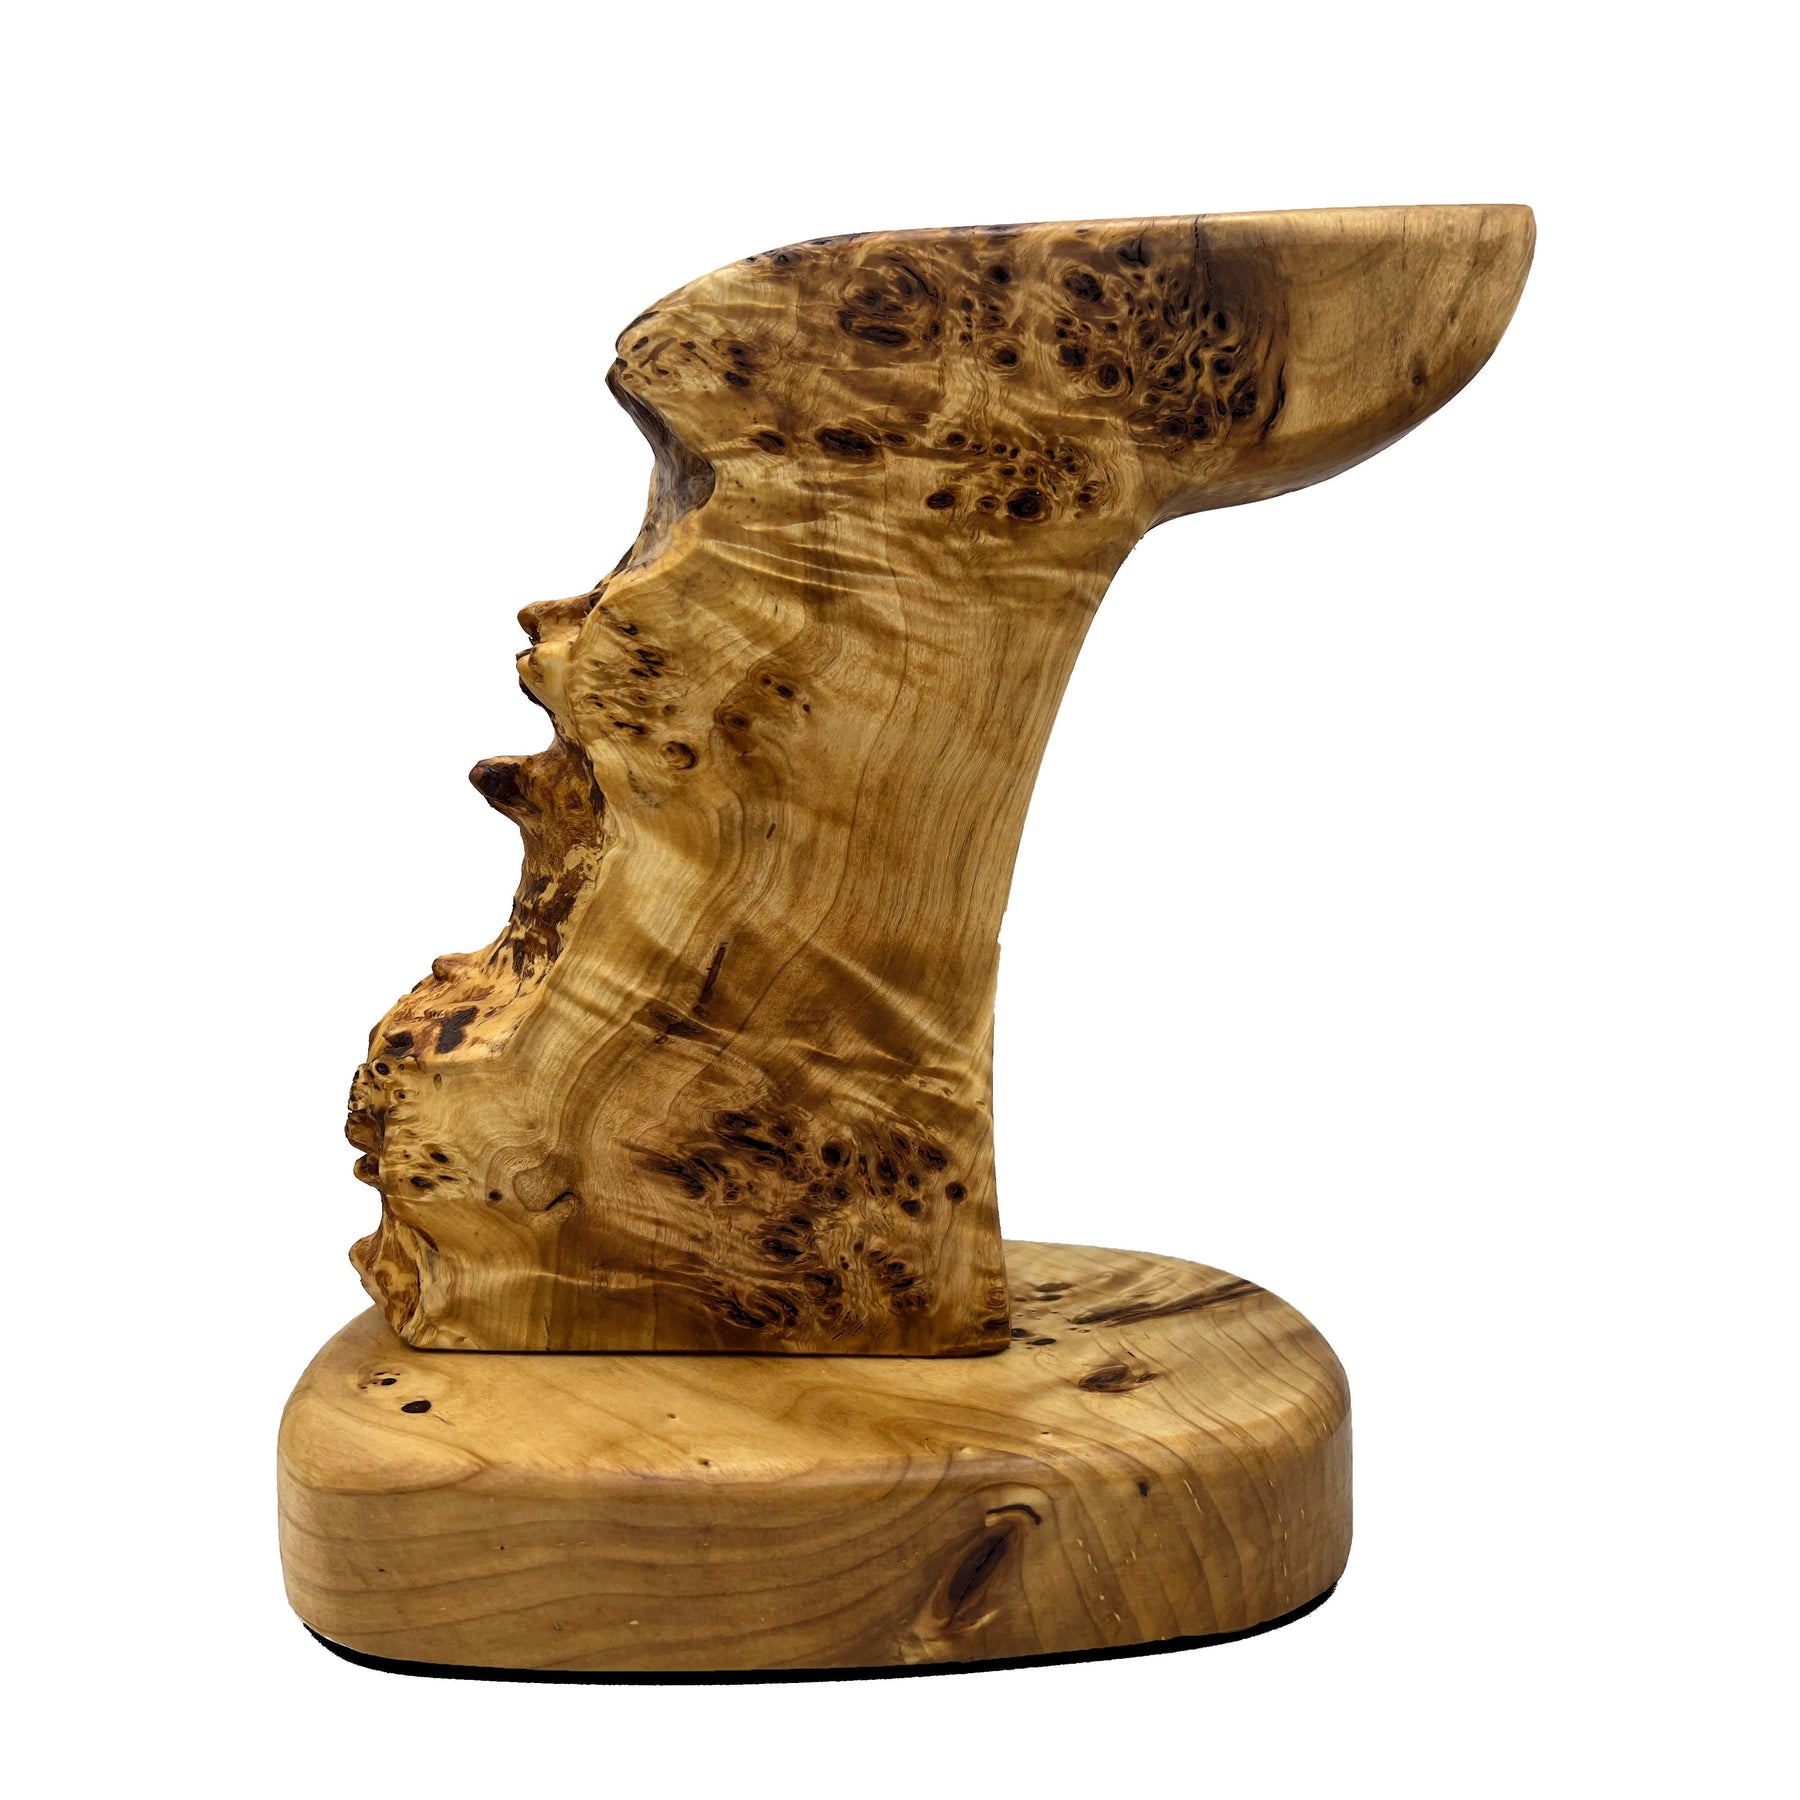 Wood Headphone Stand – Creatibly